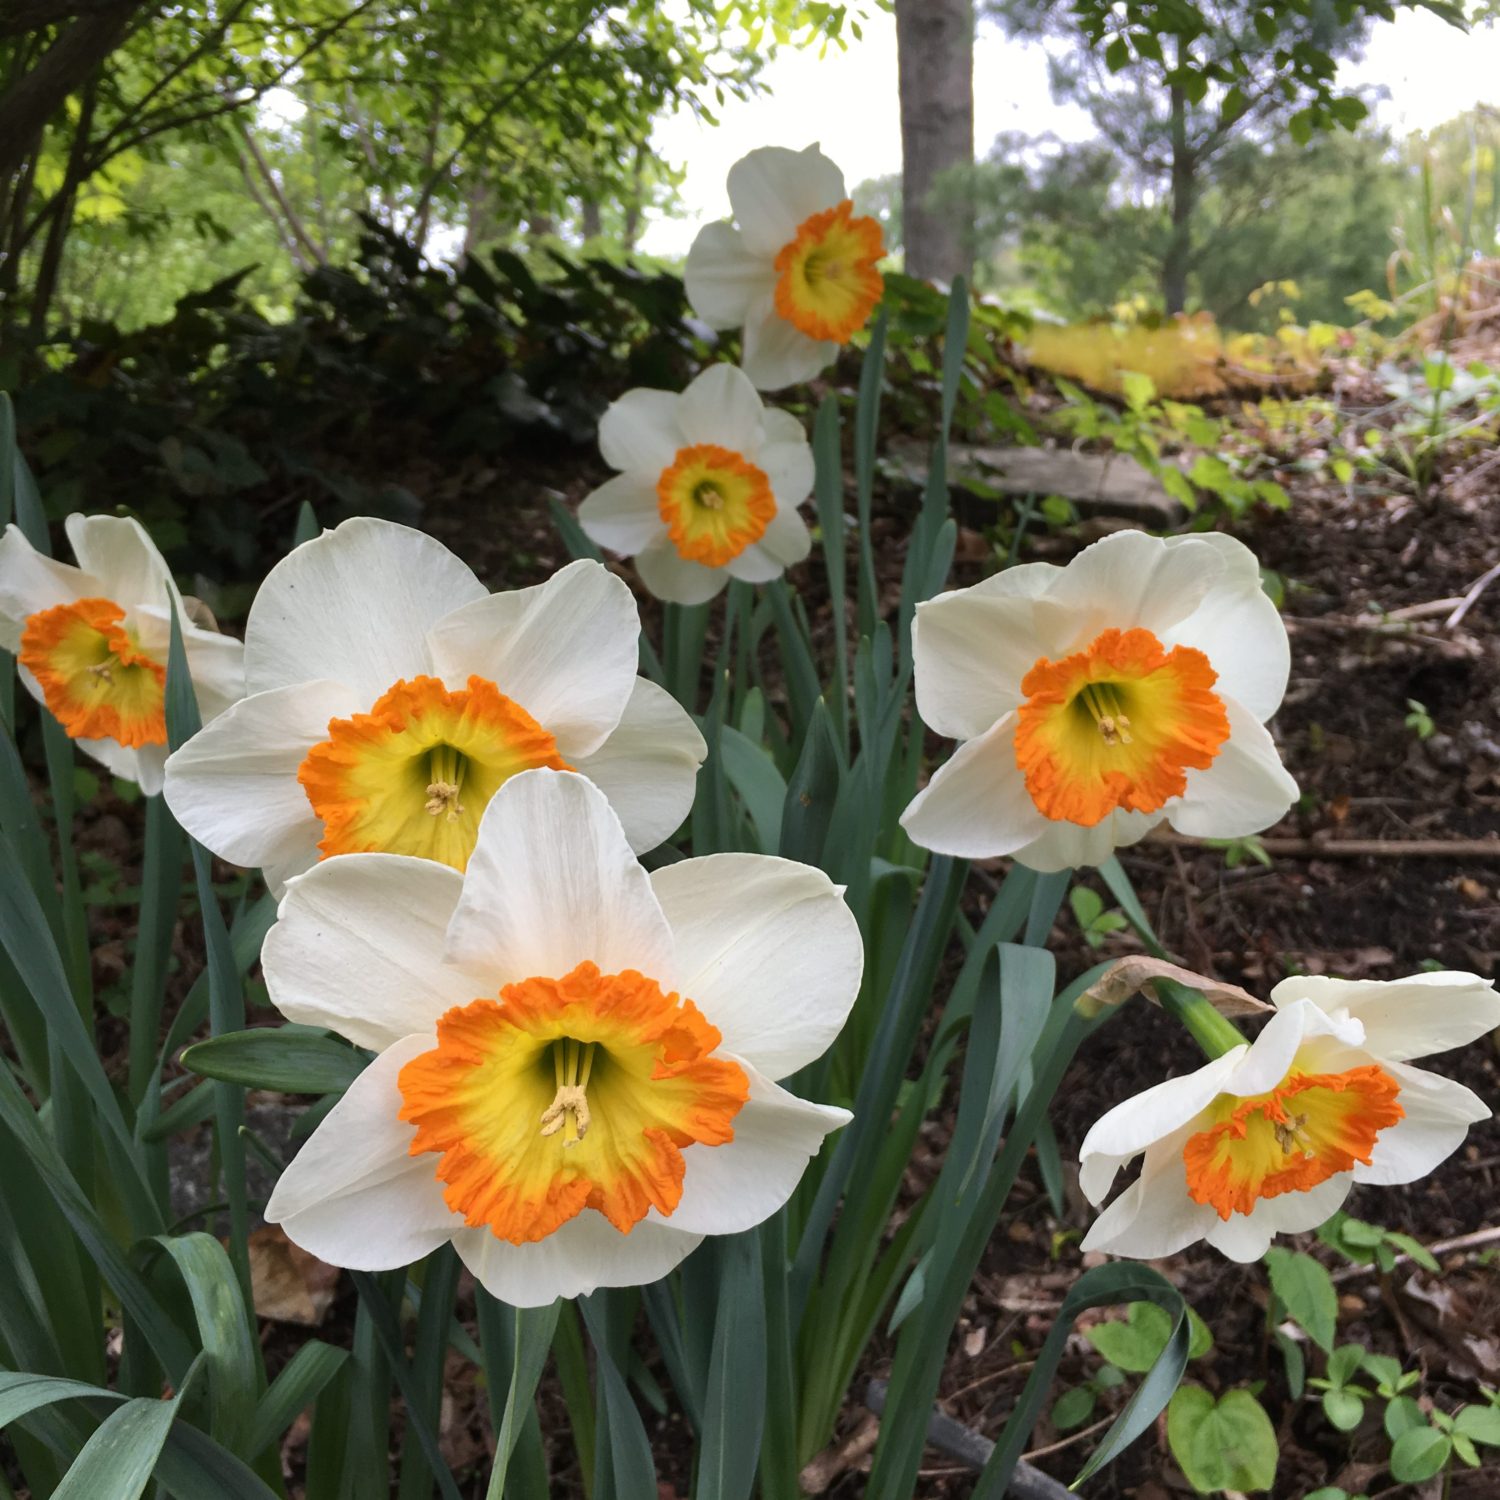 The Gardener's Delight: Planting daffodils for perennial spring ...